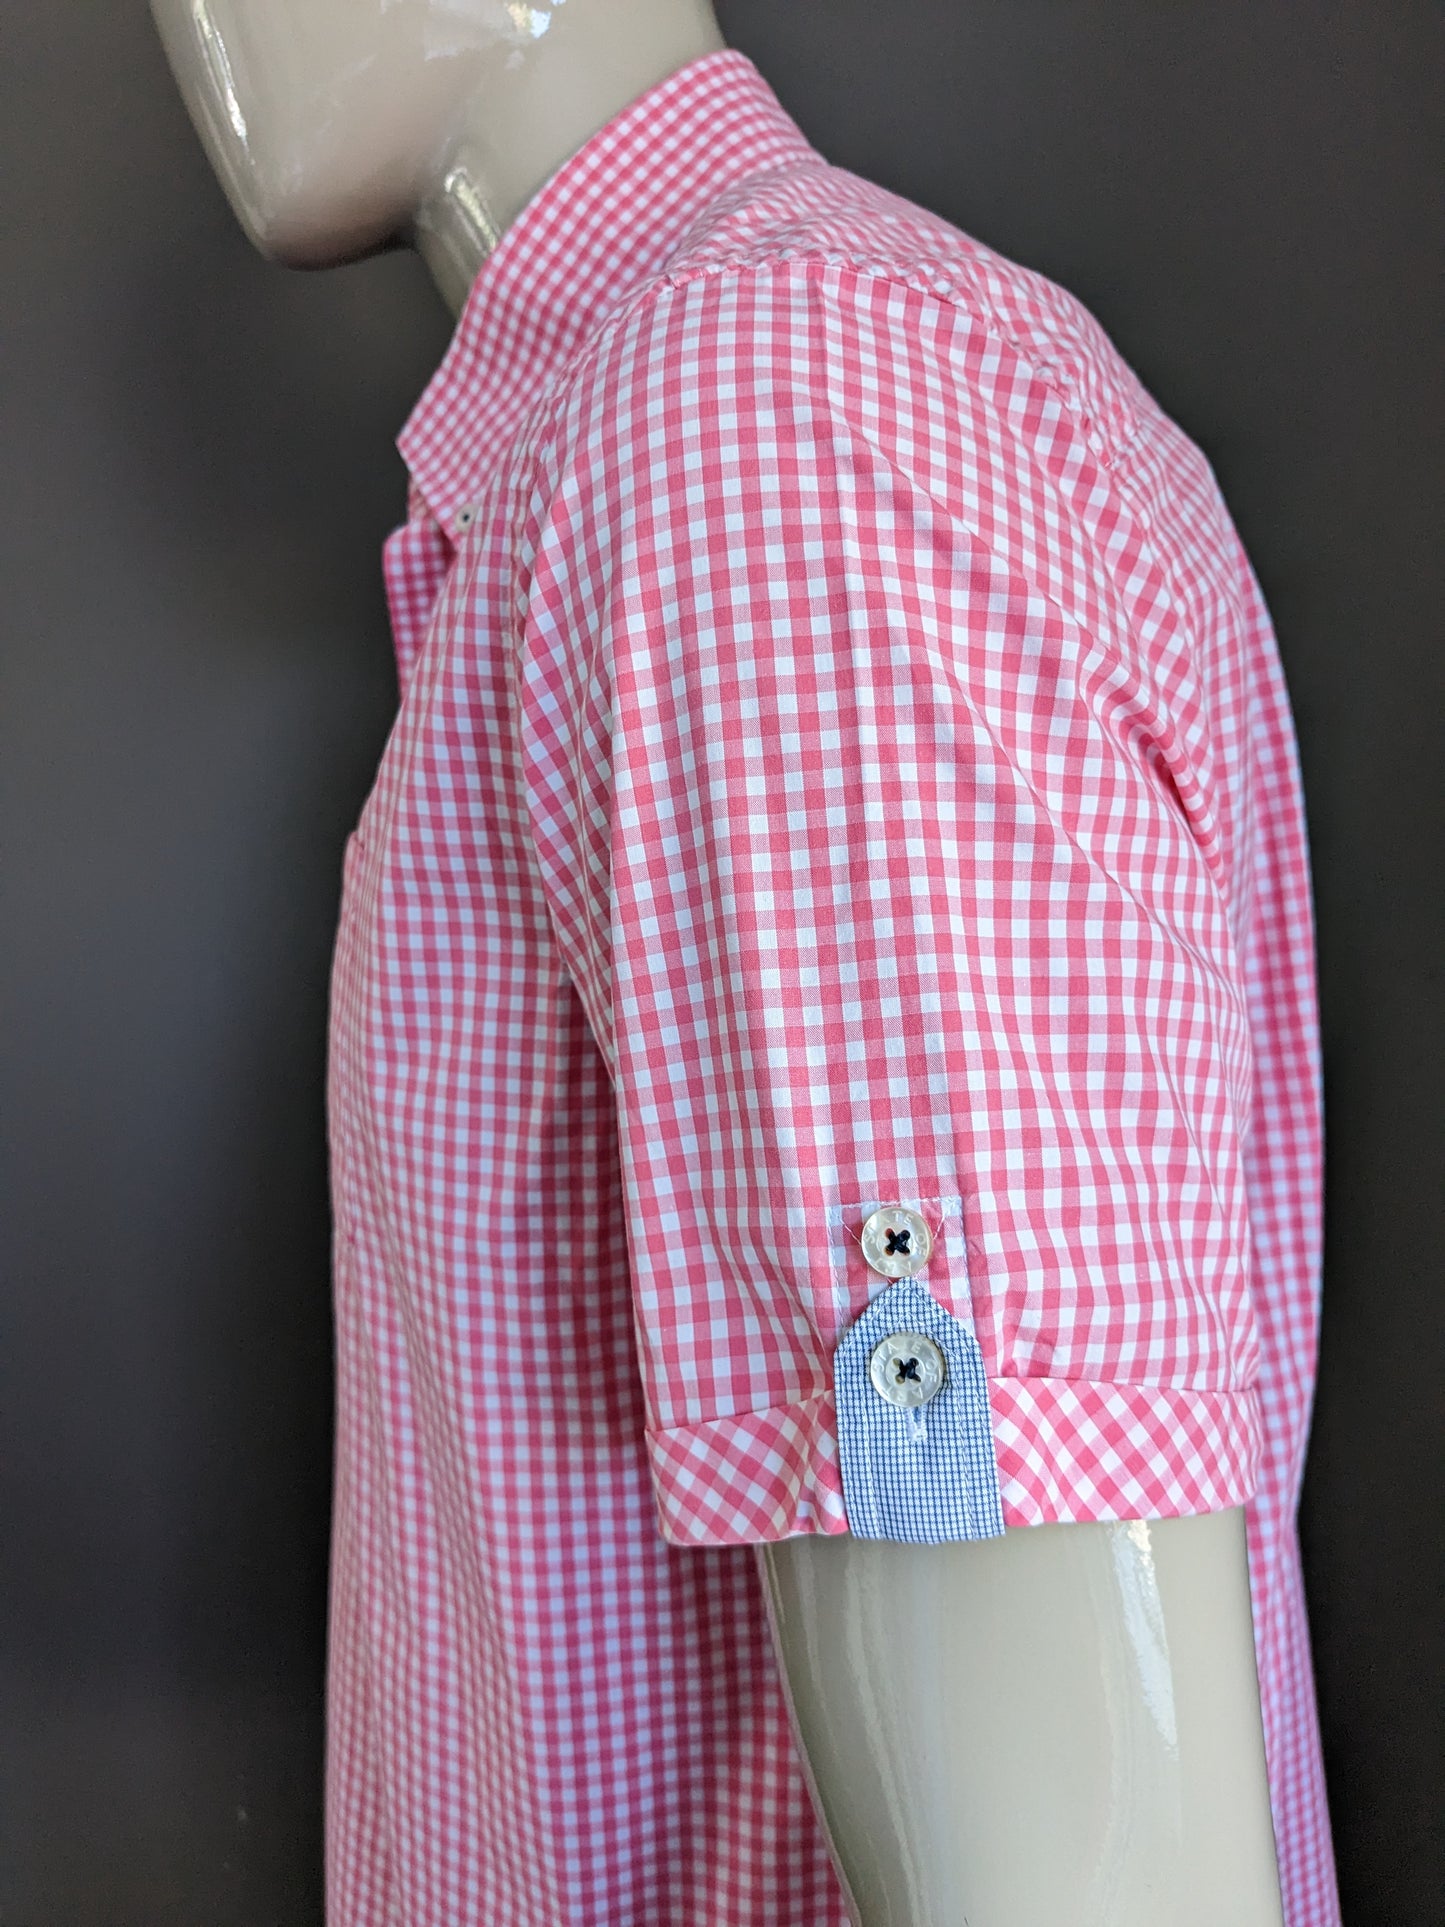 State of art shirt short sleeve. Pink white checkered. Size XL. Regular fit.